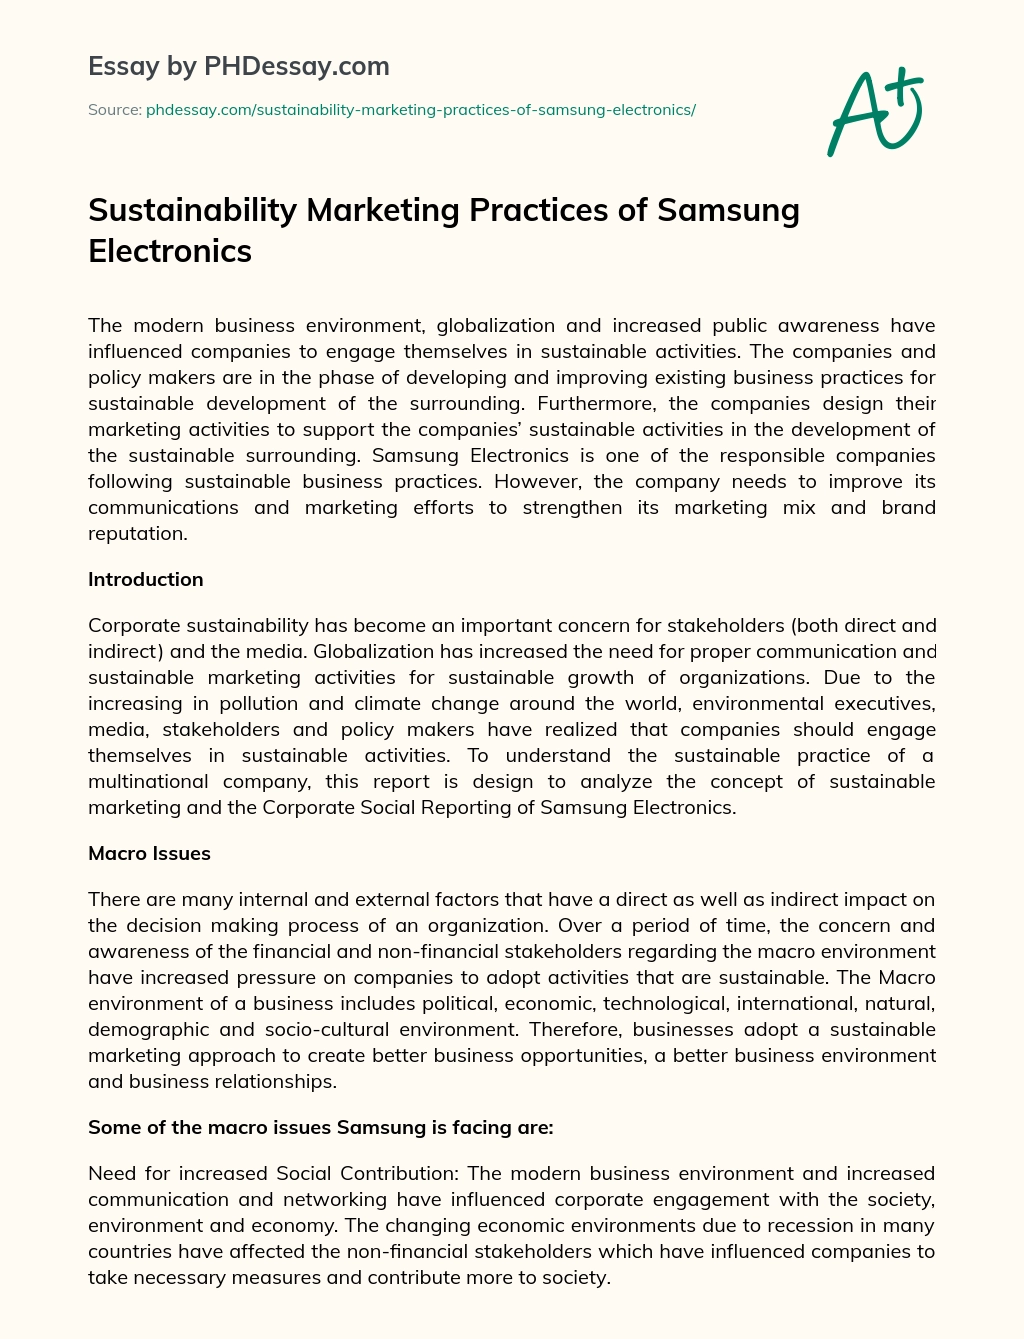 Sustainability Marketing Practices of Samsung Electronics essay